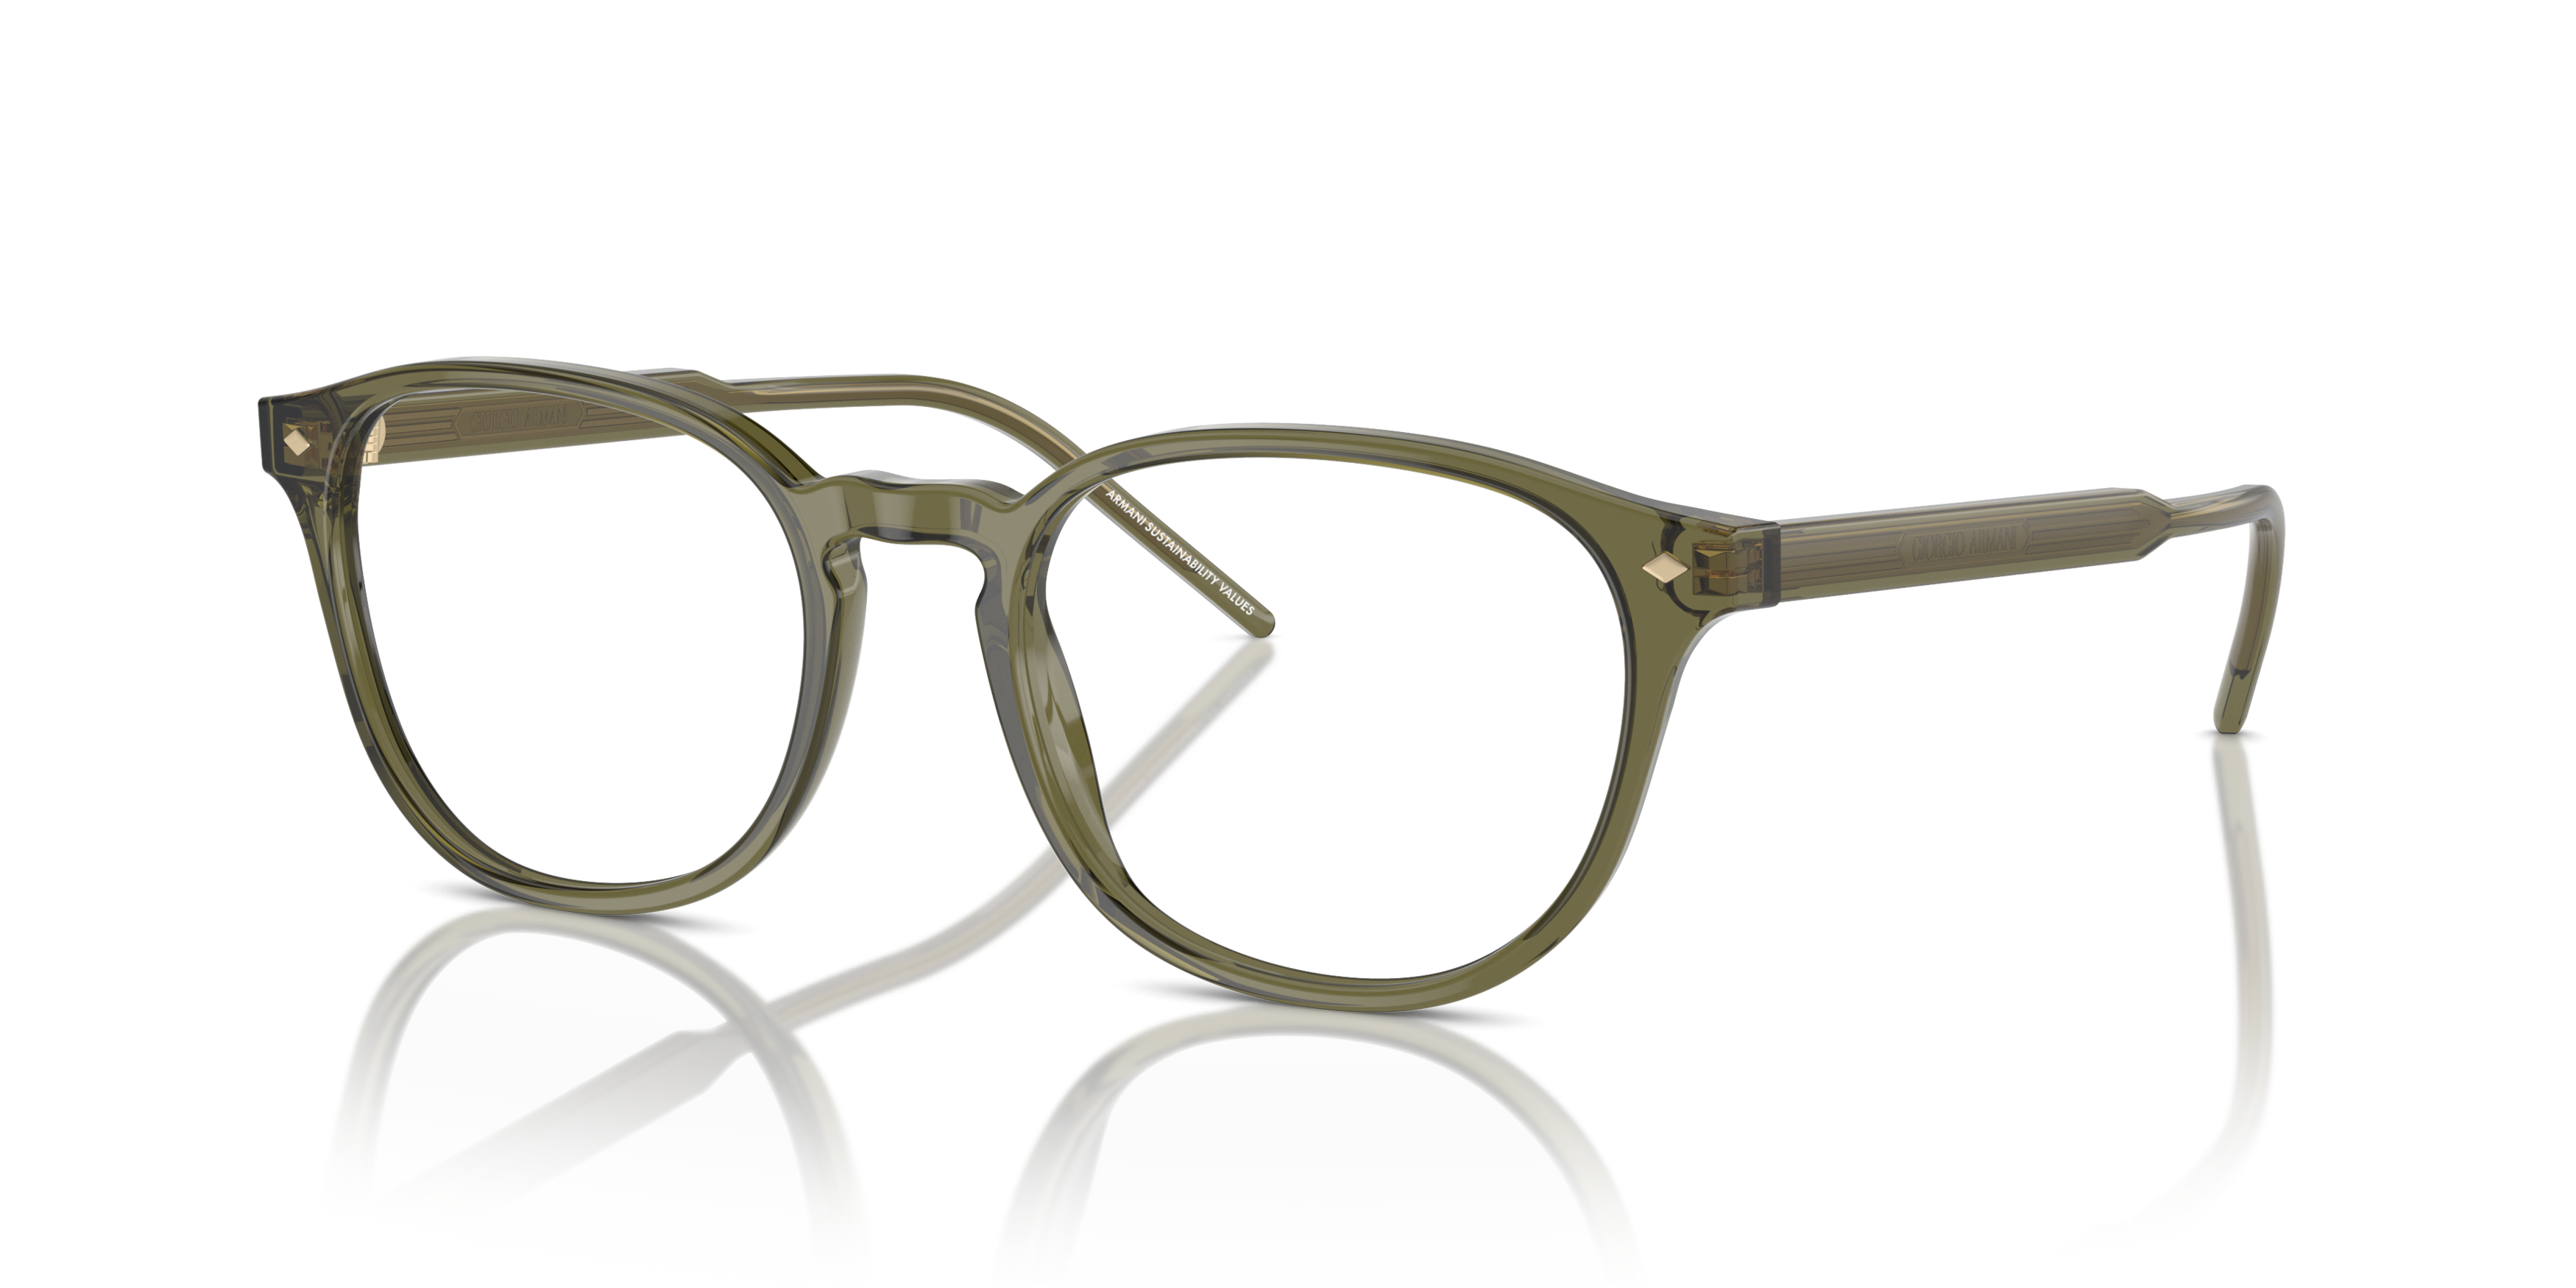 Angle_Left01 Giorgio Armani AR 7259 Glasses Transparent / Transparent, Clear